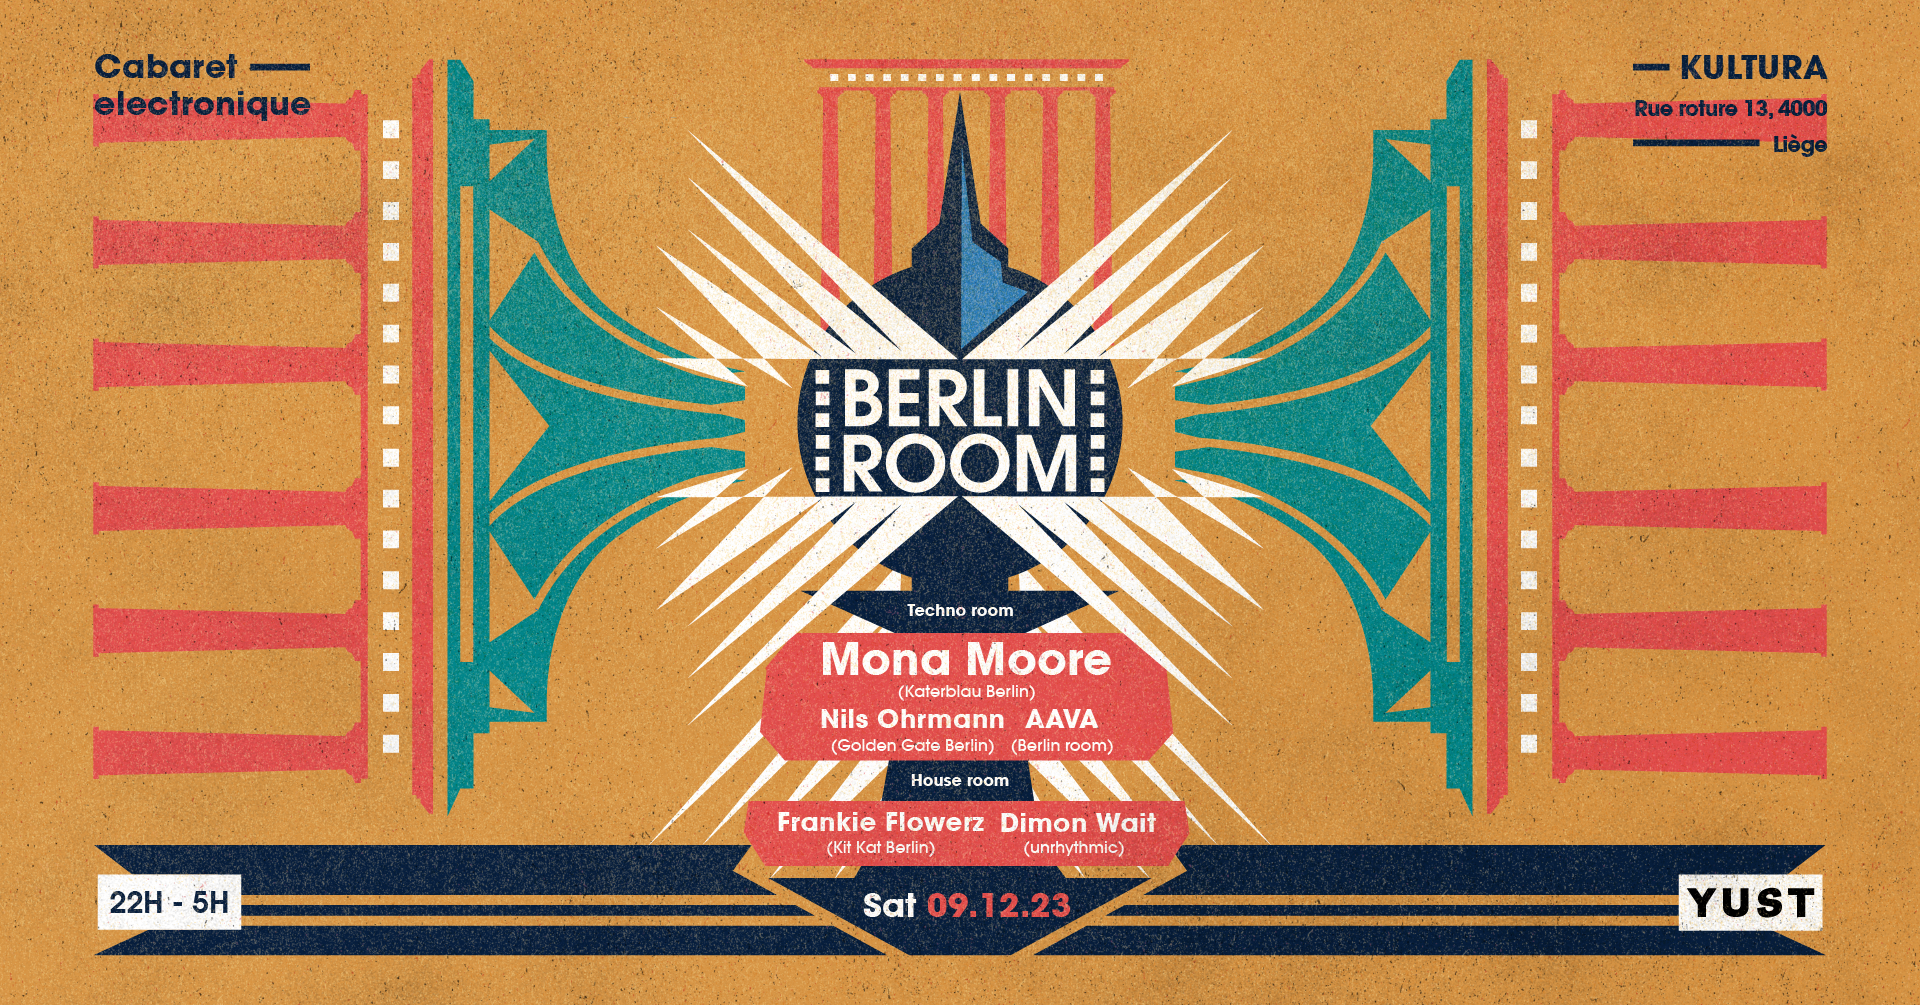 Berlin room with Mona Moore, Nils Ohrmann, Frankie Flowerz, AAVA, Dimon Wait - Página trasera